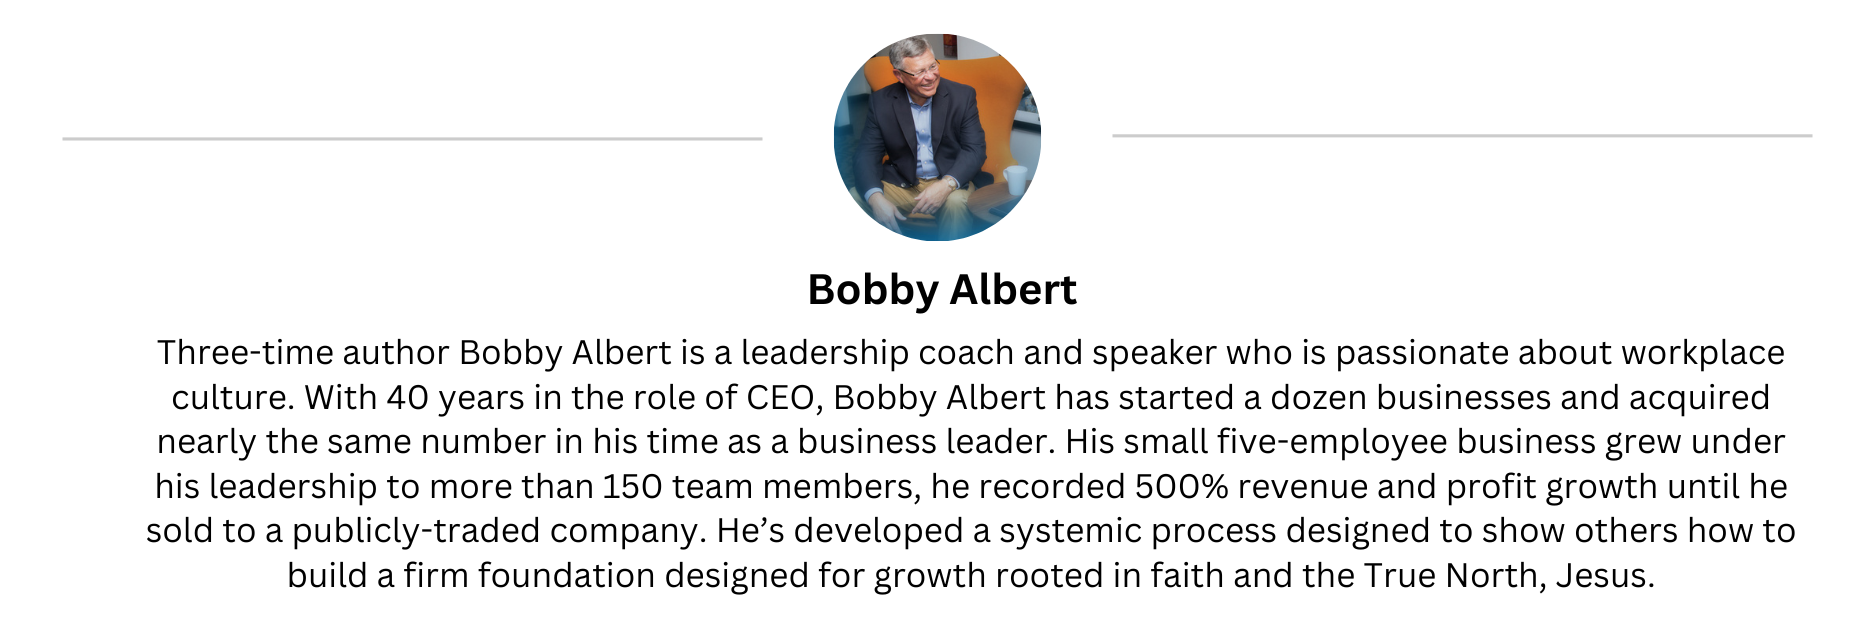 Bobby Albert Biography and Image